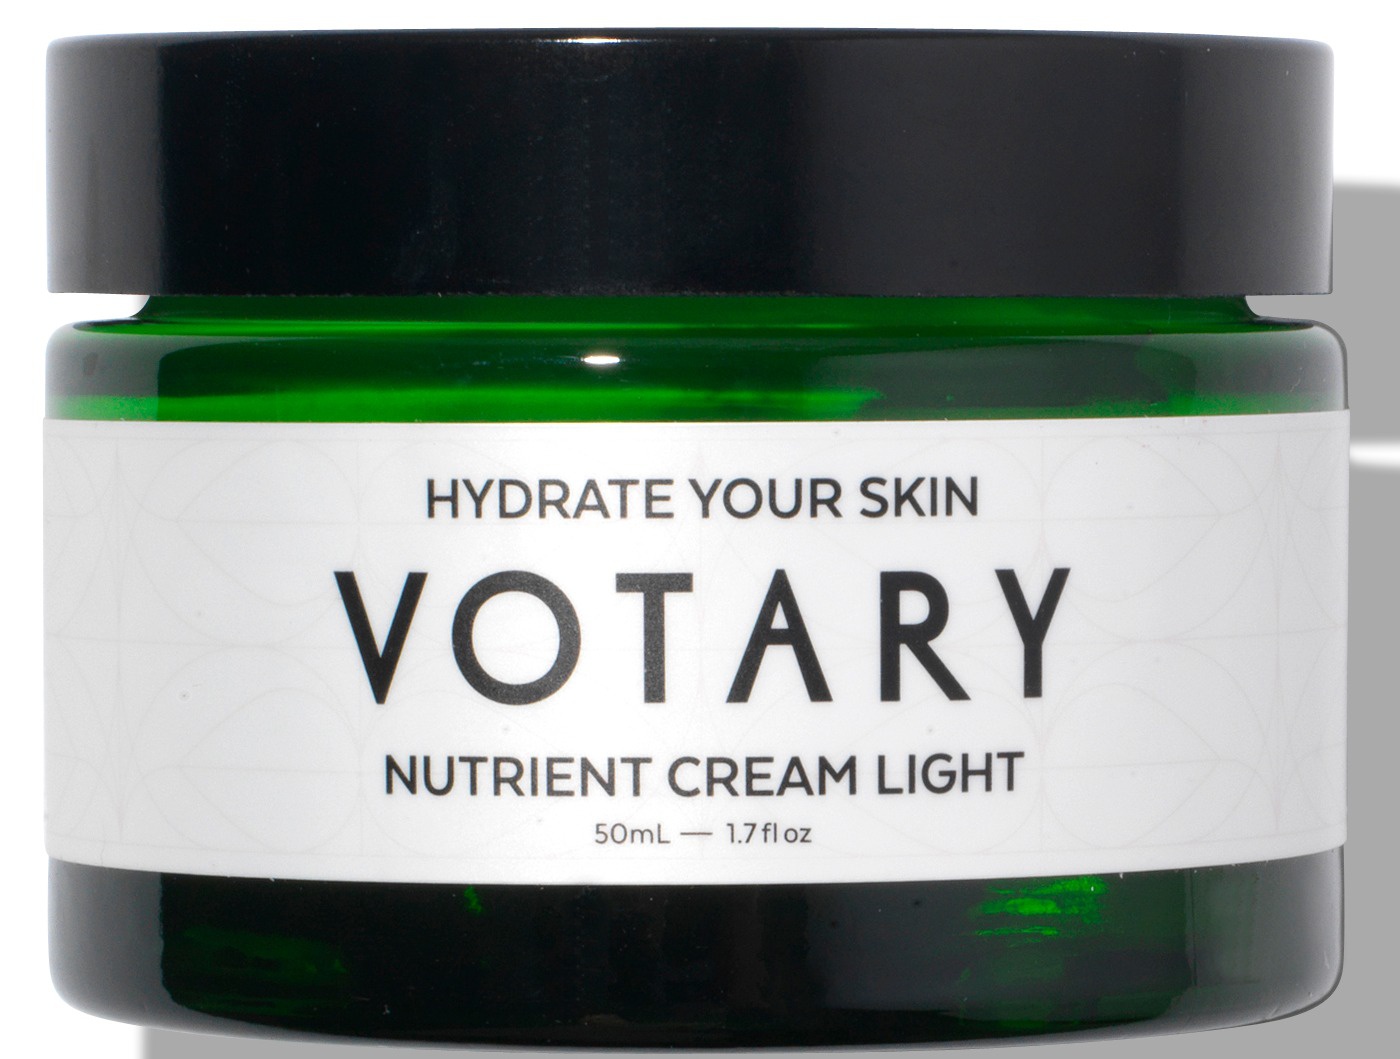 Votary Nutrient Cream Light